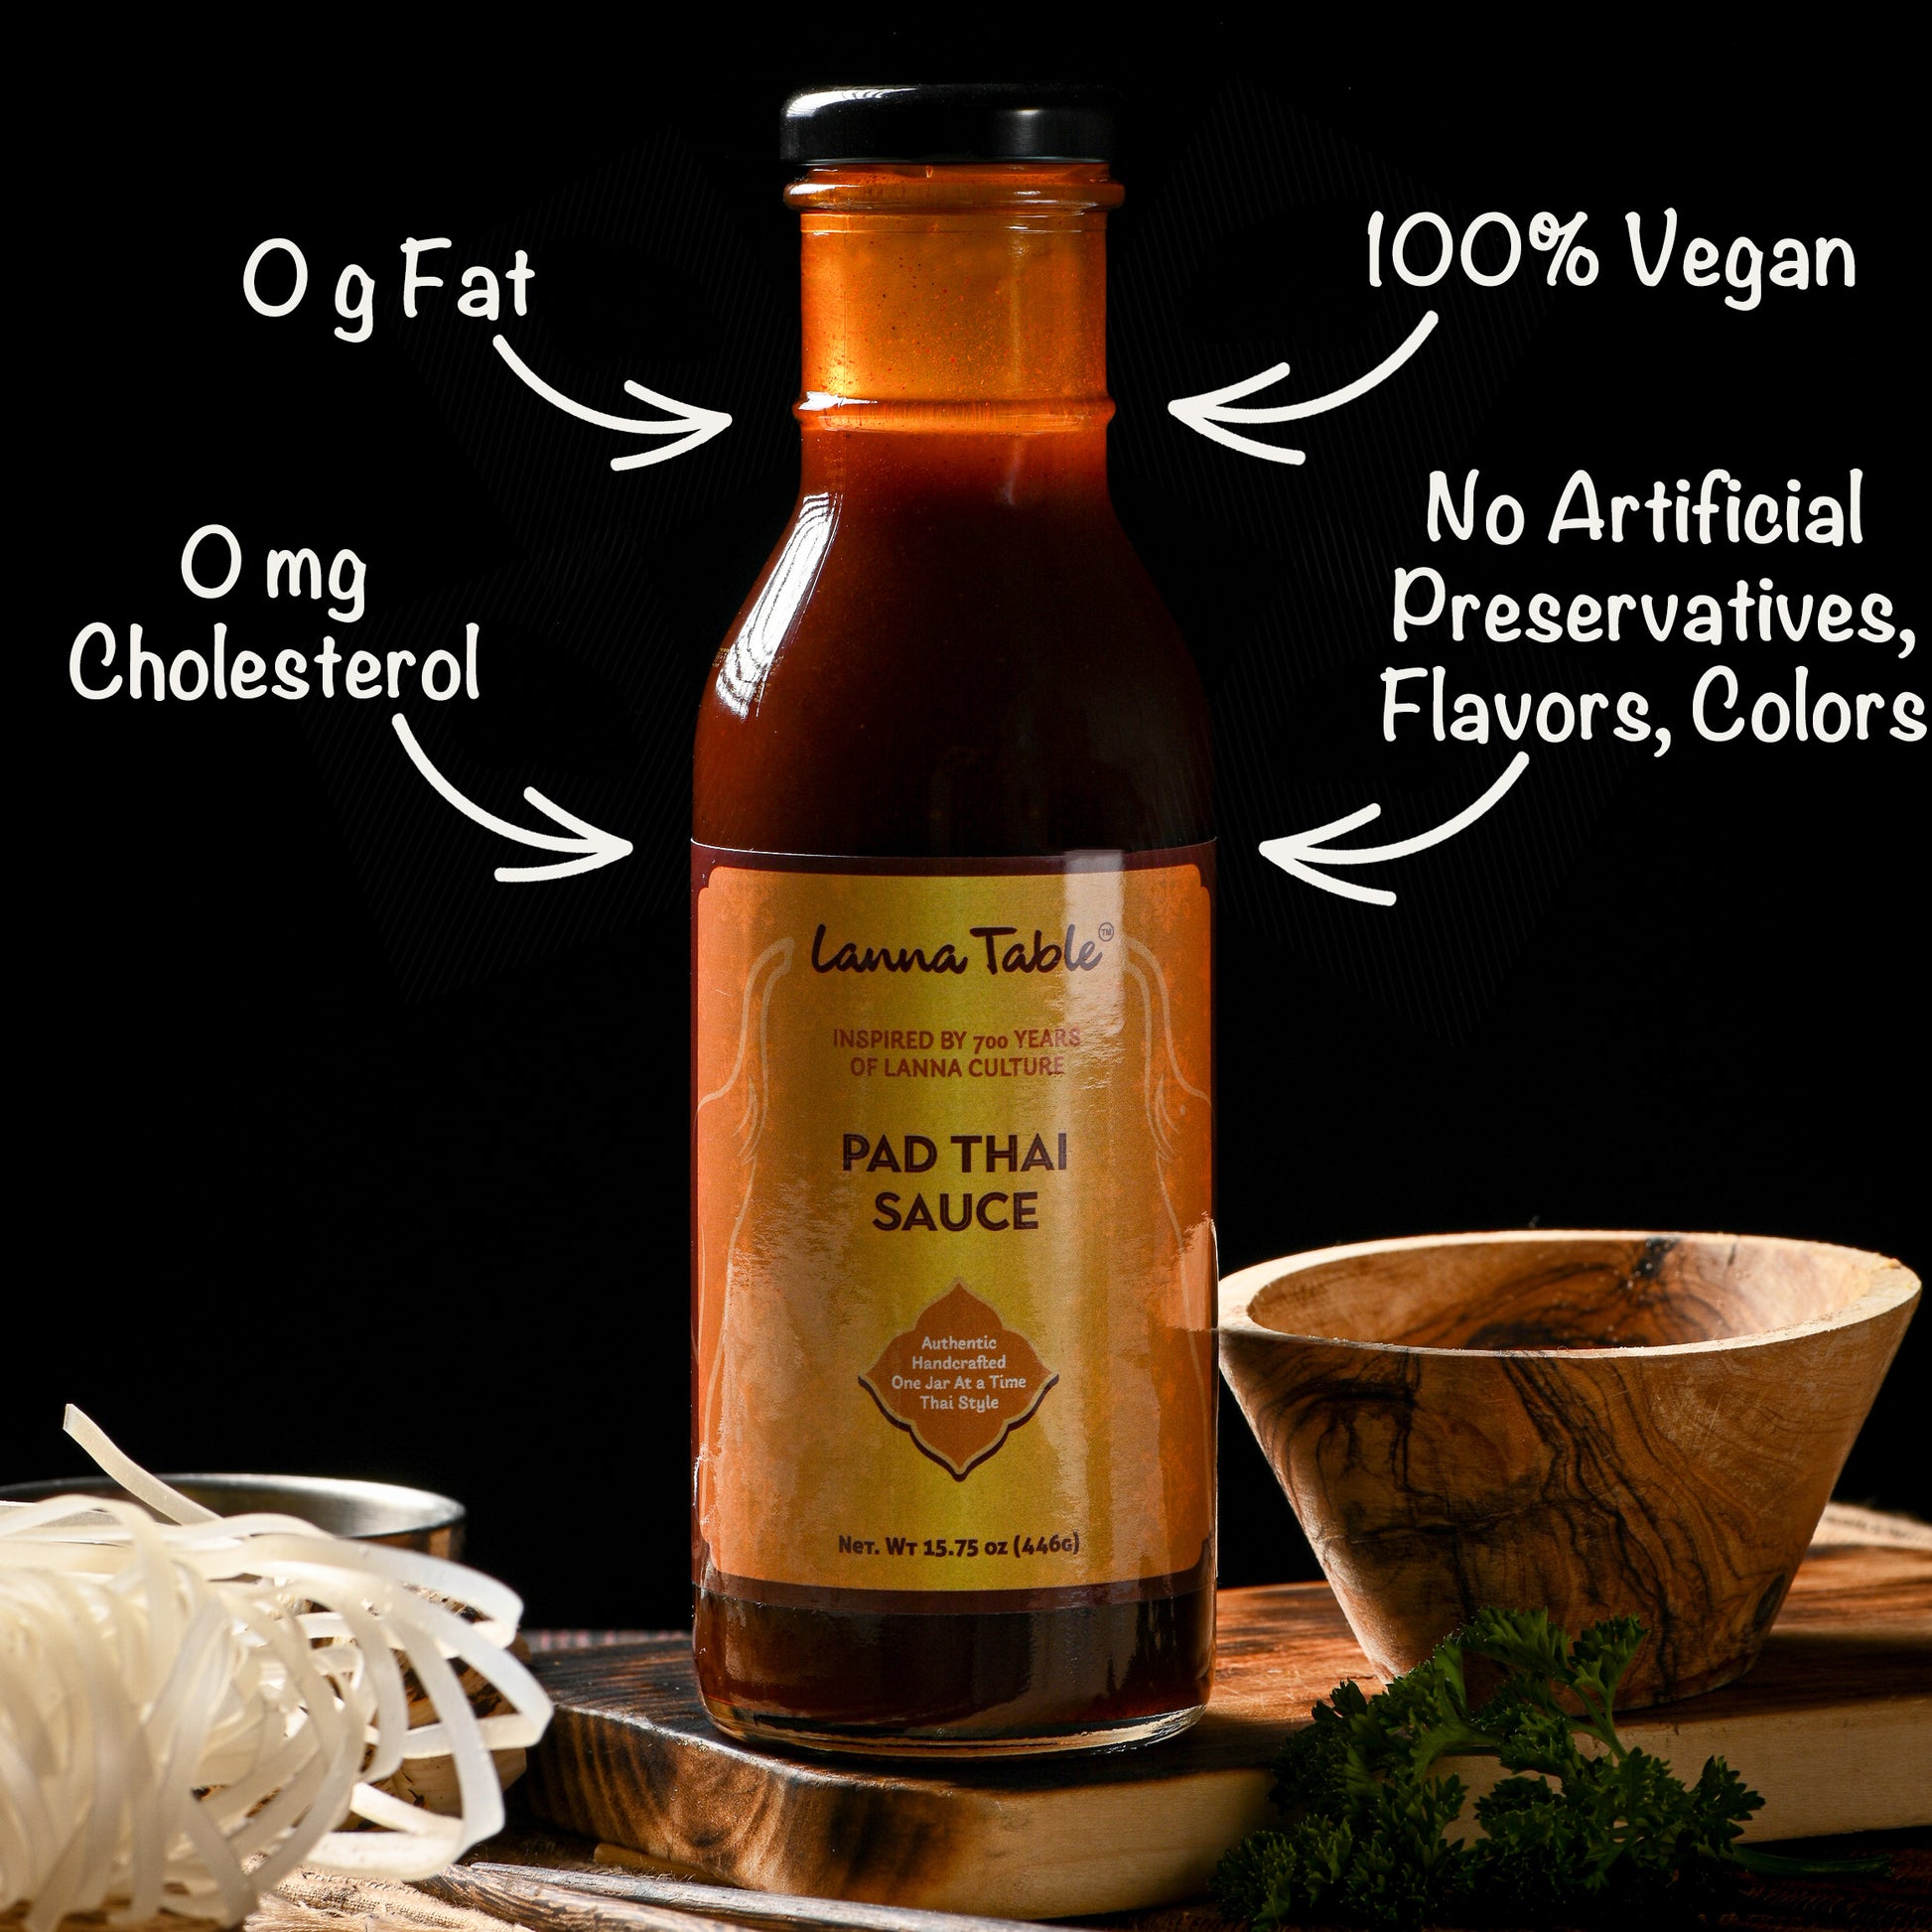 non fat, zero mg cholesterol, 100% vegan vegterian, no artificial preservatives flavors colors, best pad thai sauce 